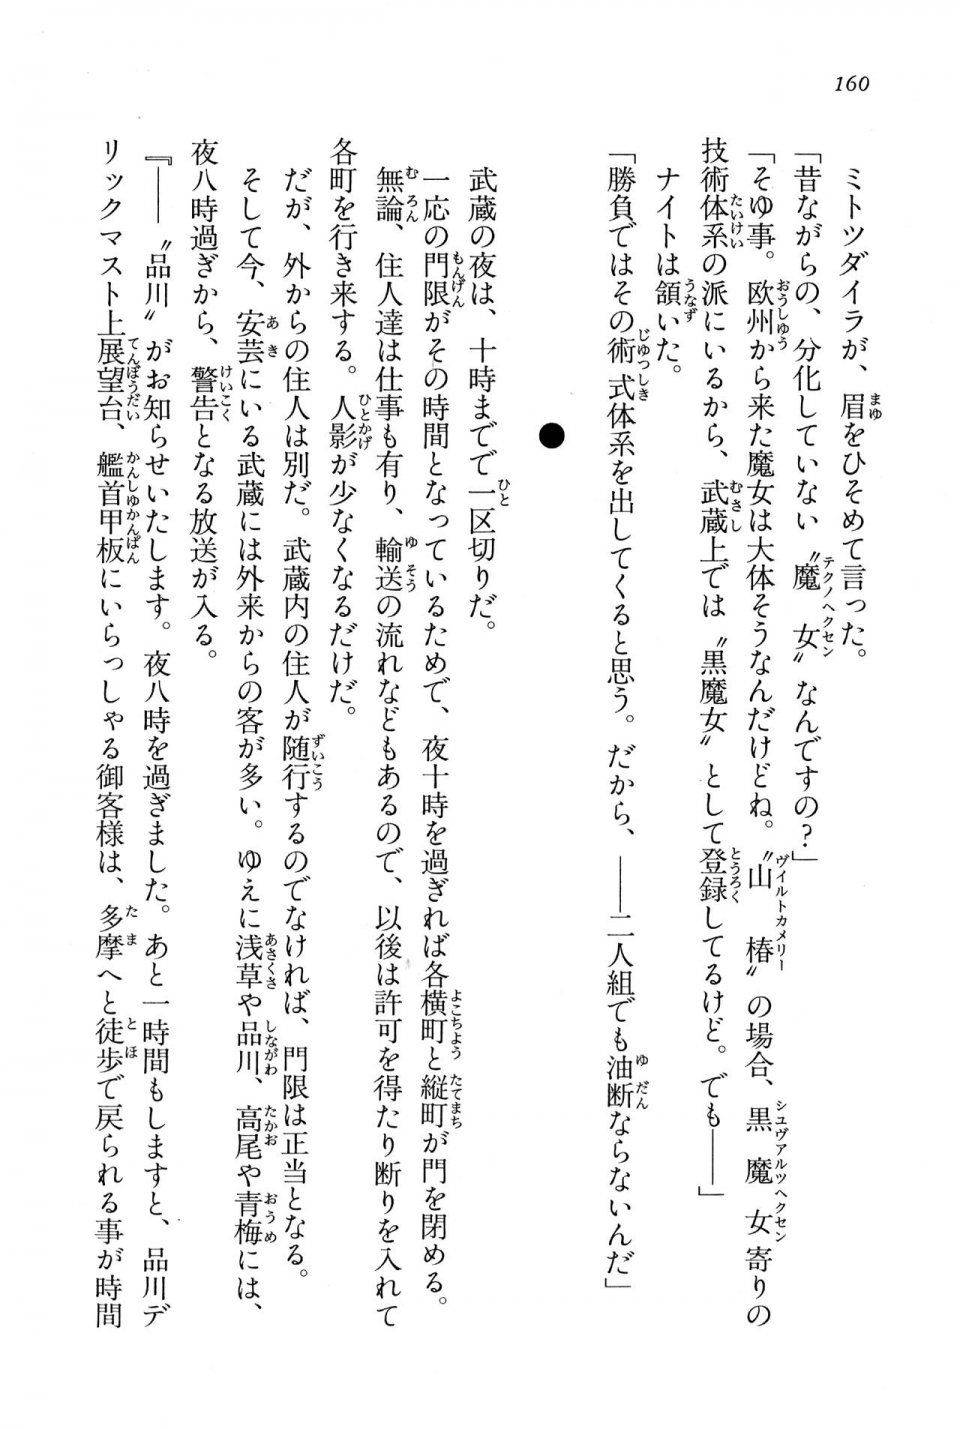 Kyoukai Senjou no Horizon BD Special Mininovel Vol 7(4A) - Photo #164